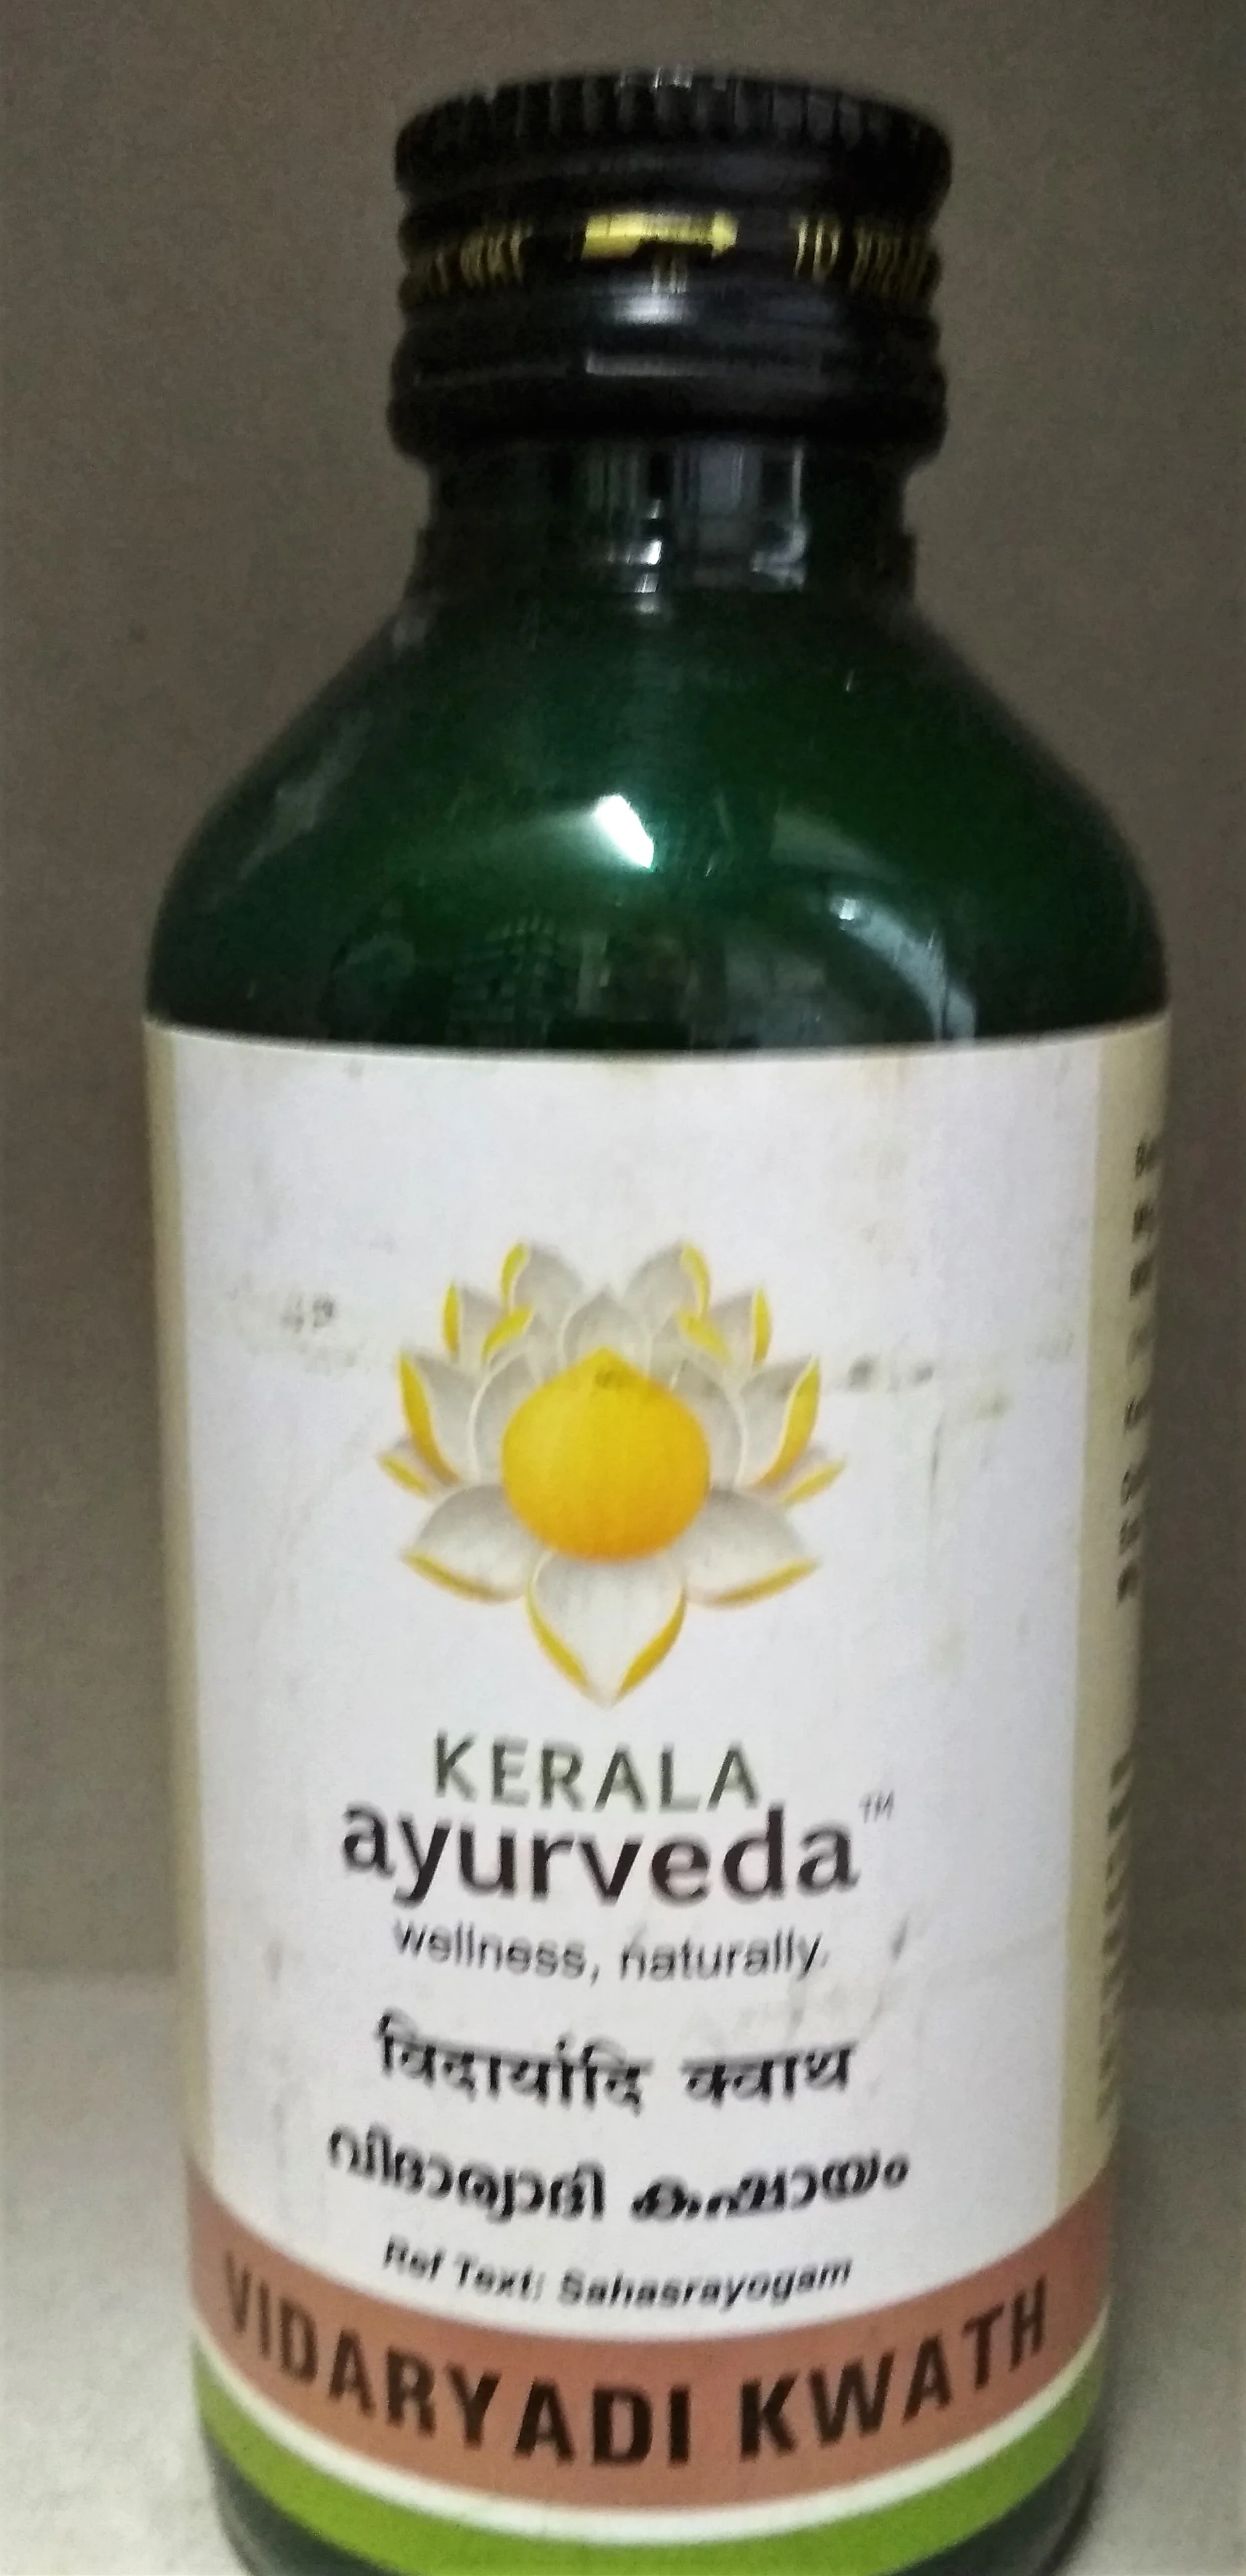 vidaryadi kwath 200 ml kerala ayurveda Ltd